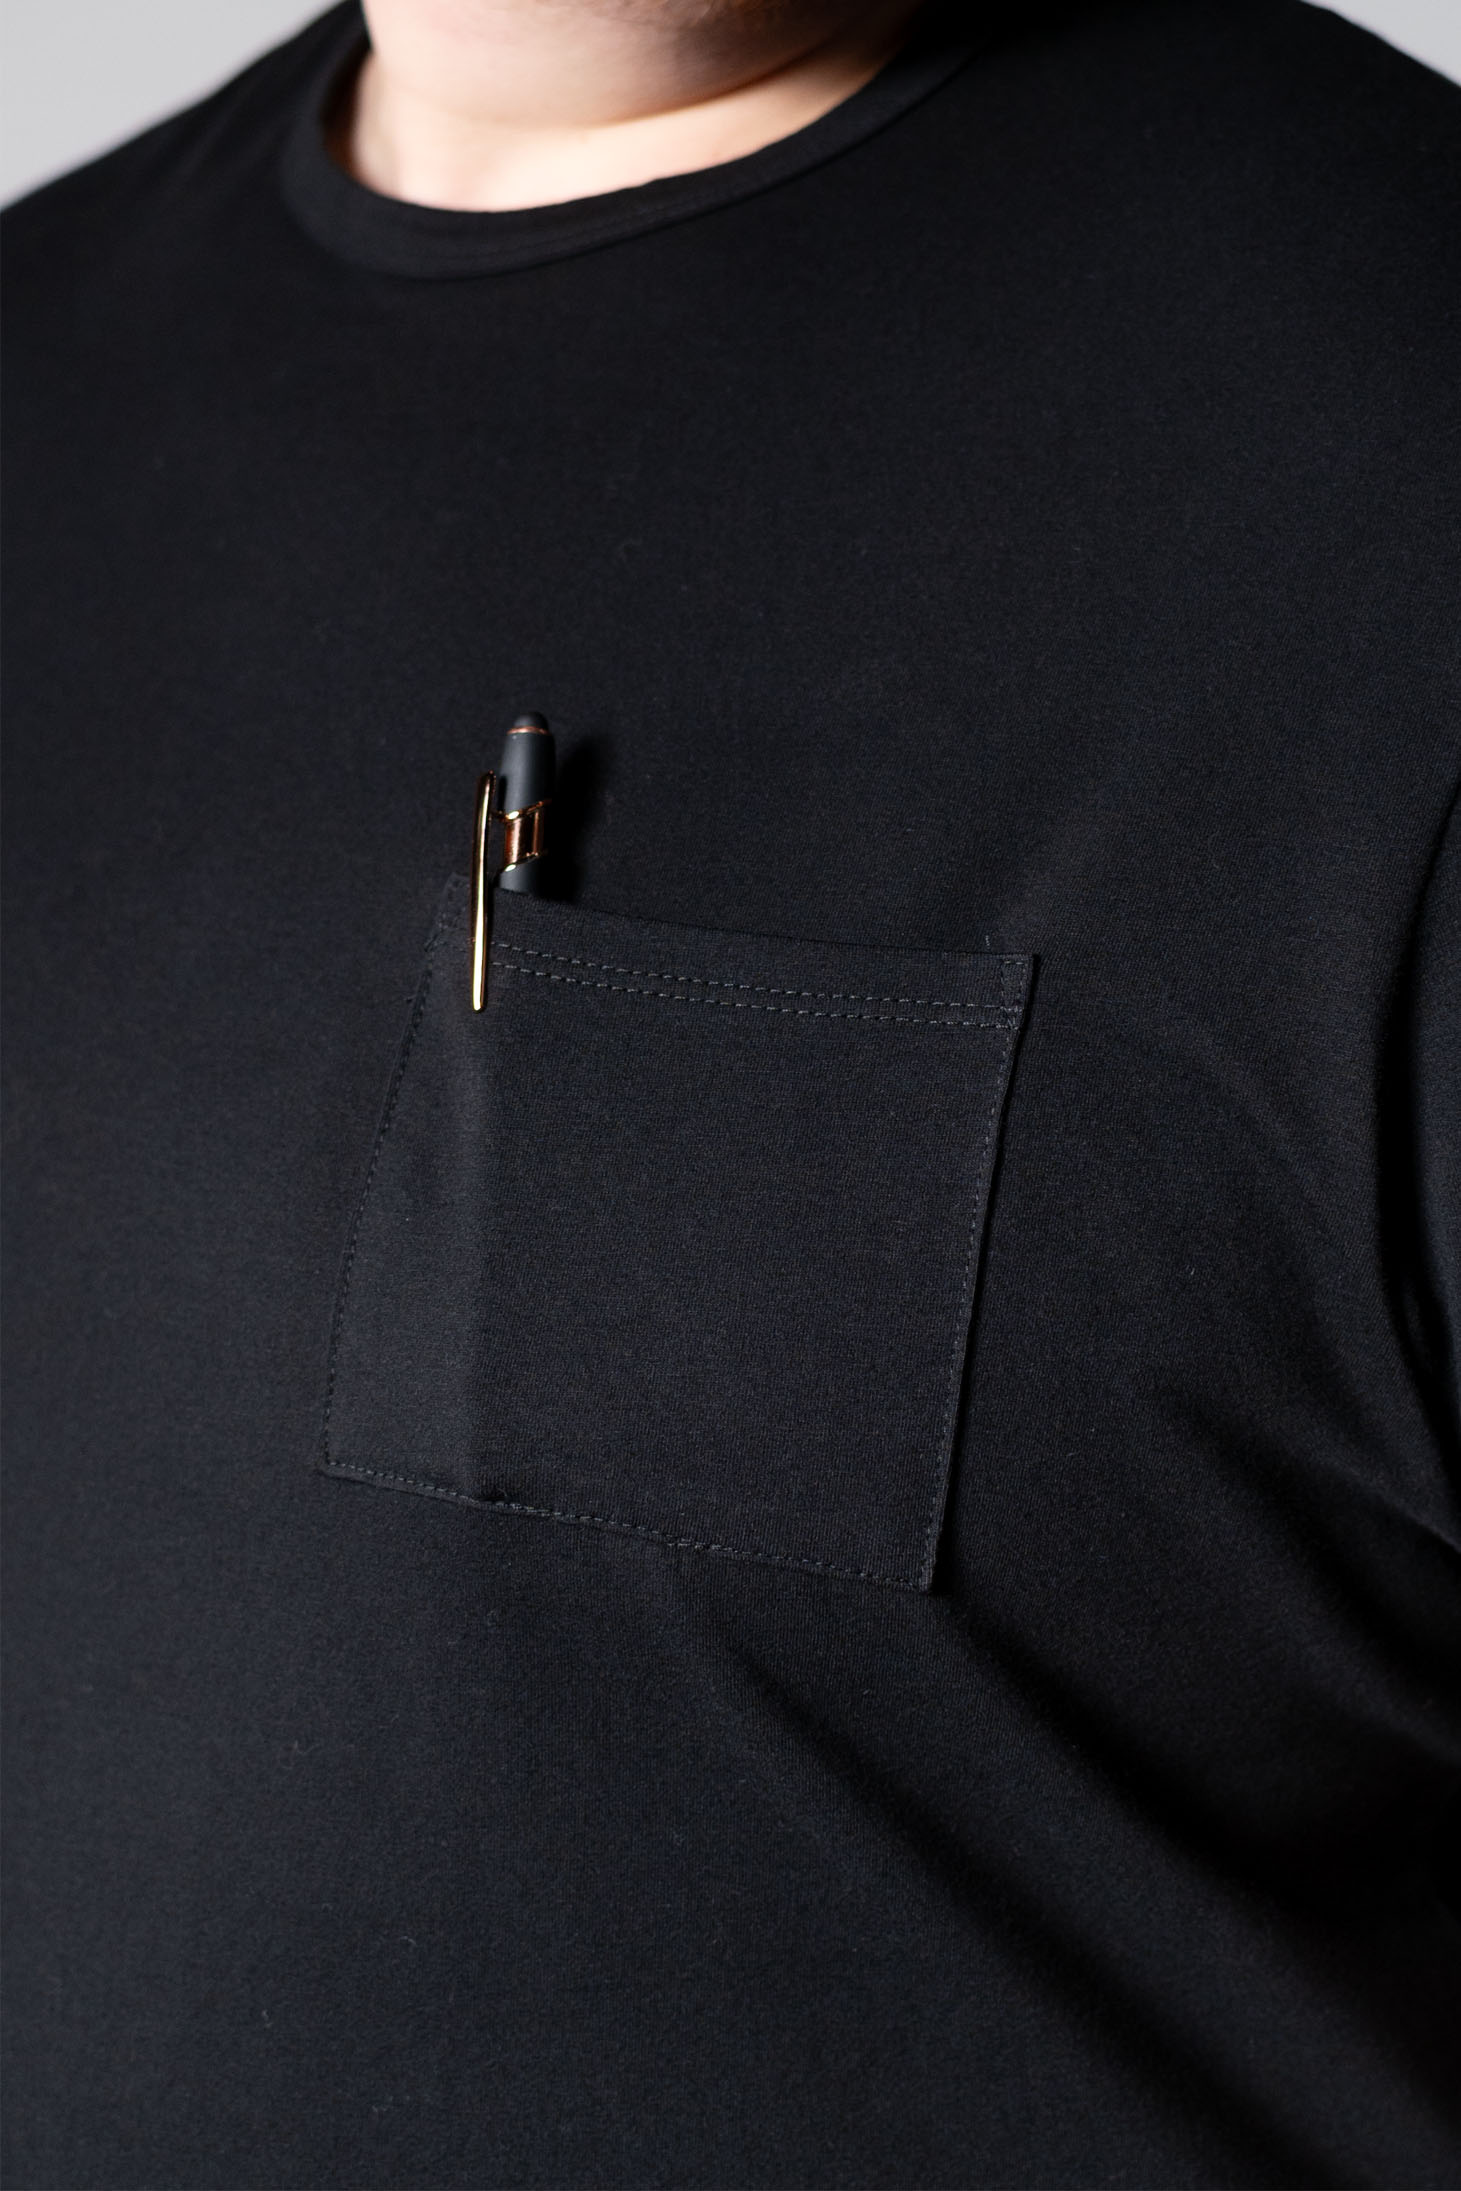 Pocket - Black